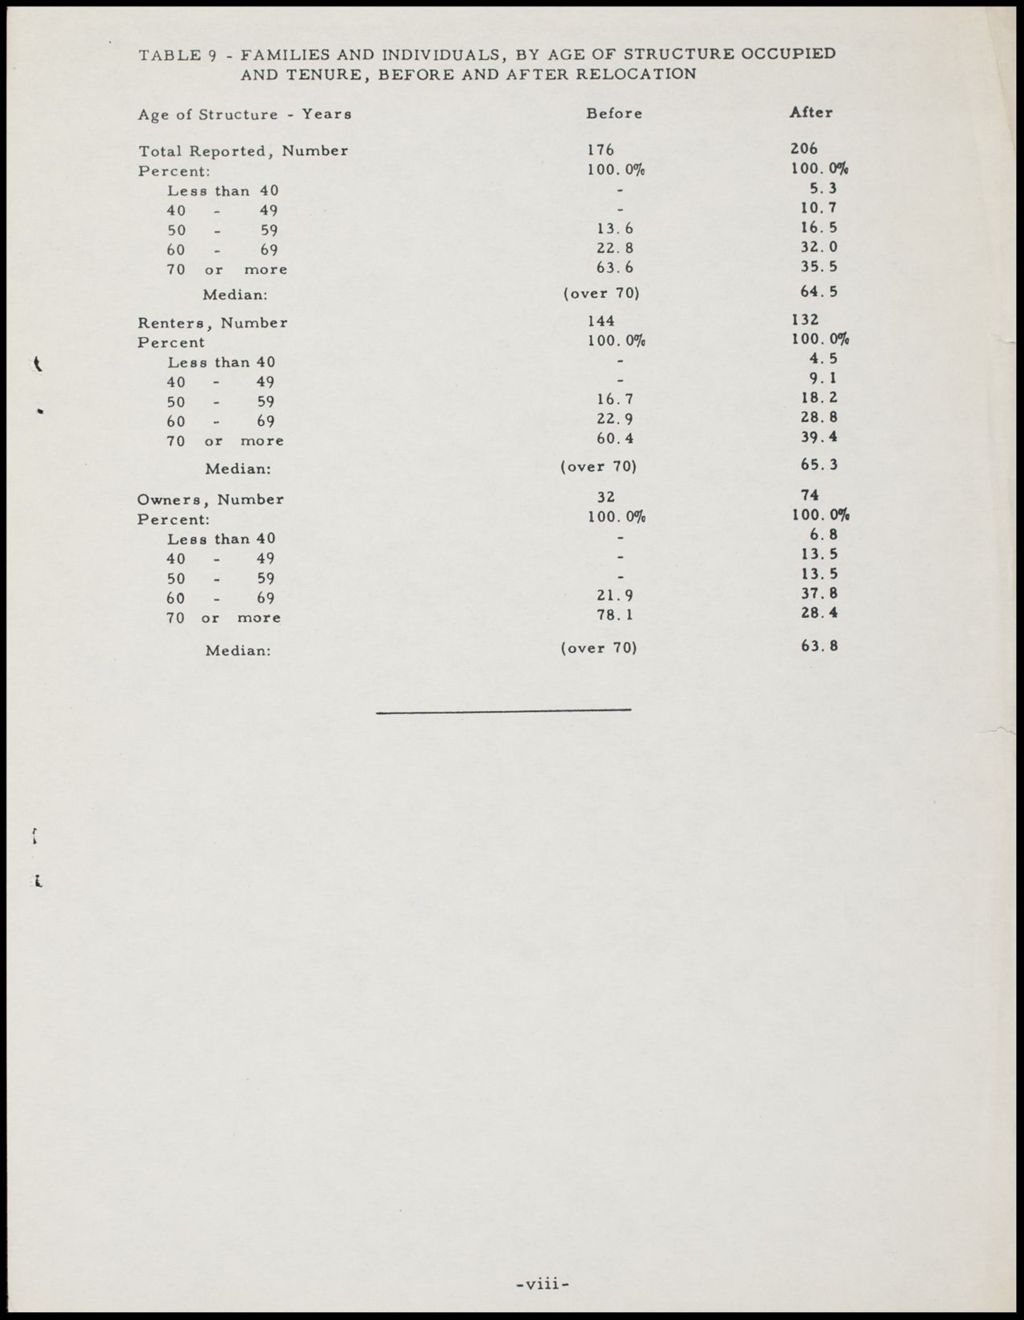 Miniature of CHA Annual Report, 1973 (Folder III-346)